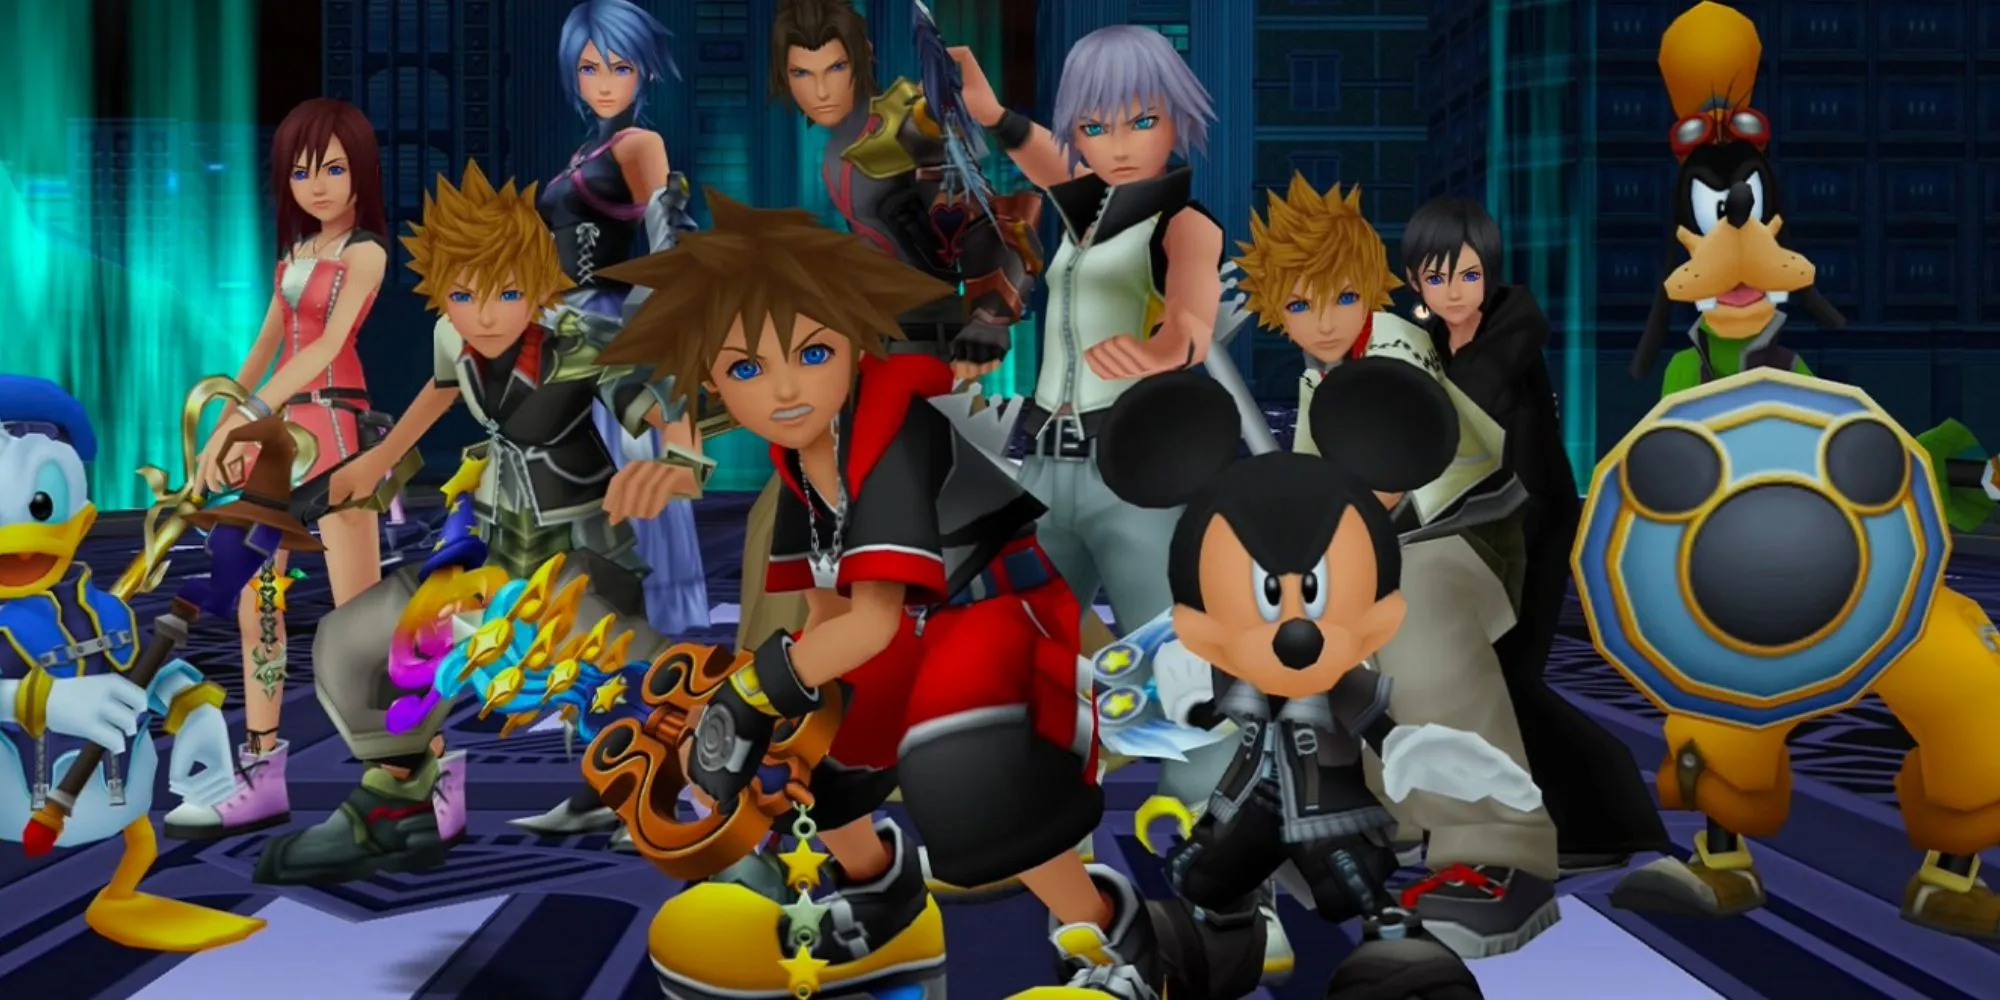 Sora and Friends in Kingdom Hearts